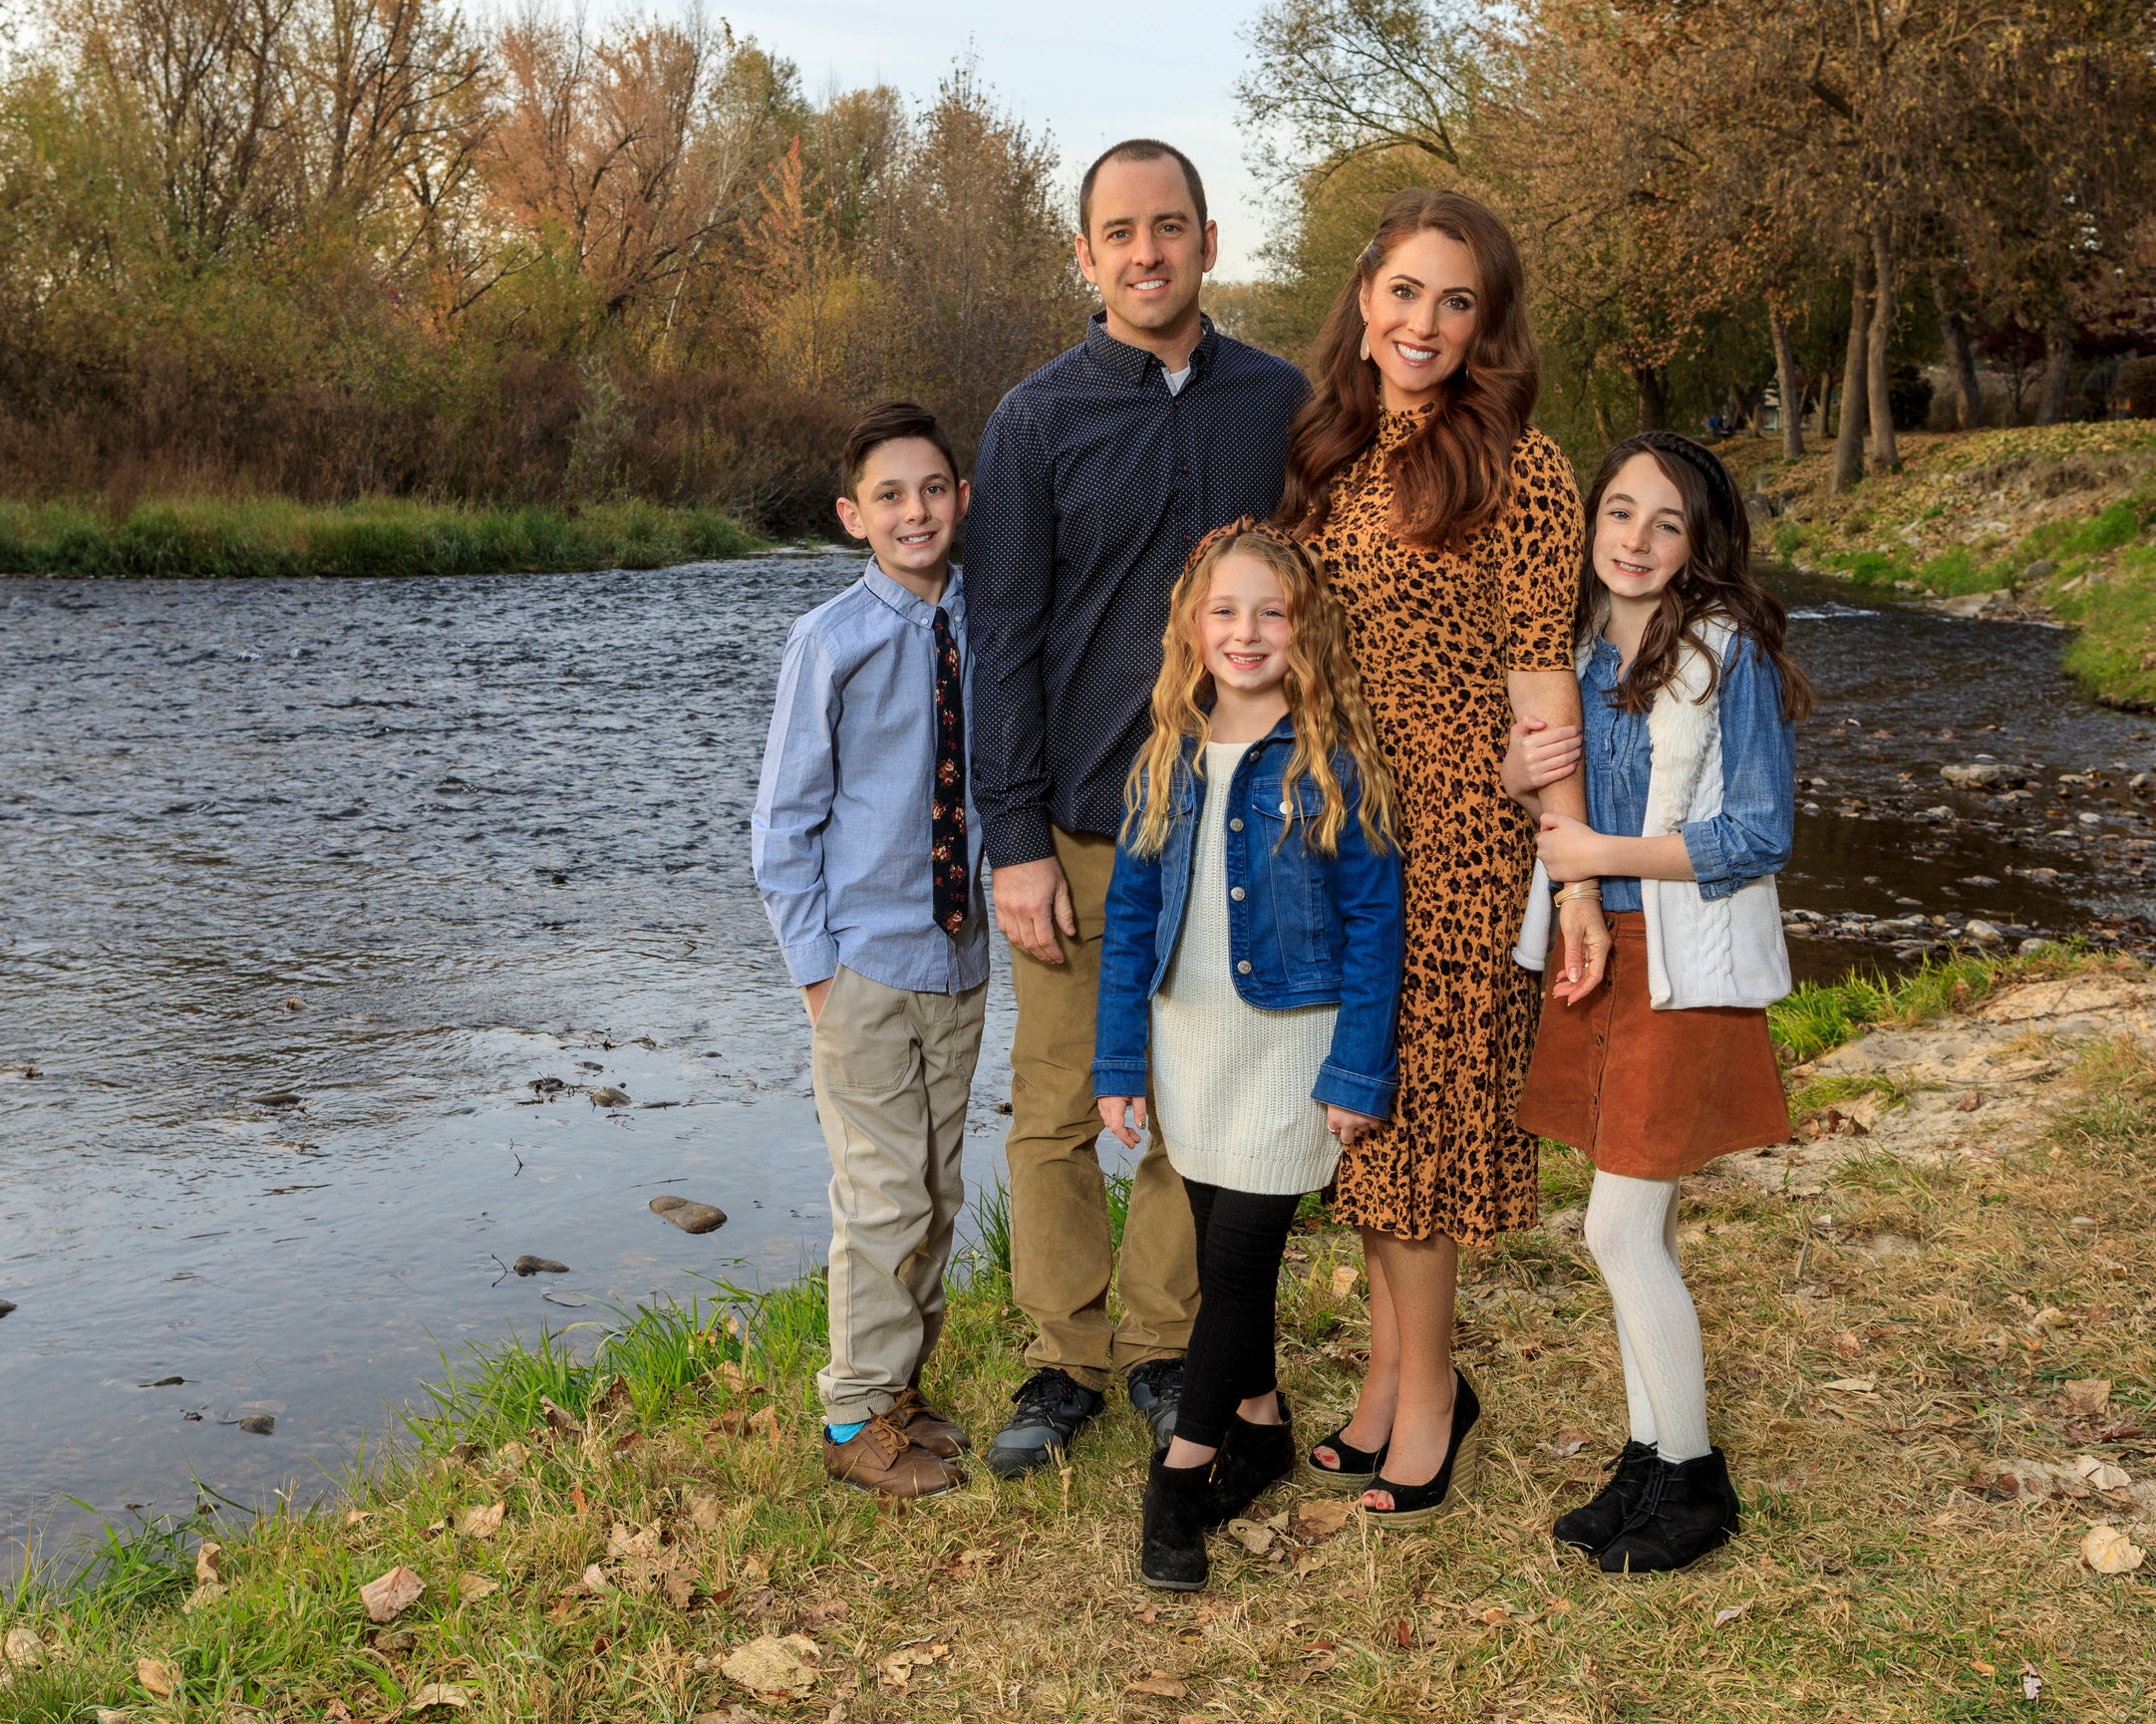 Fall Family Portraits at Boise River, late Fall